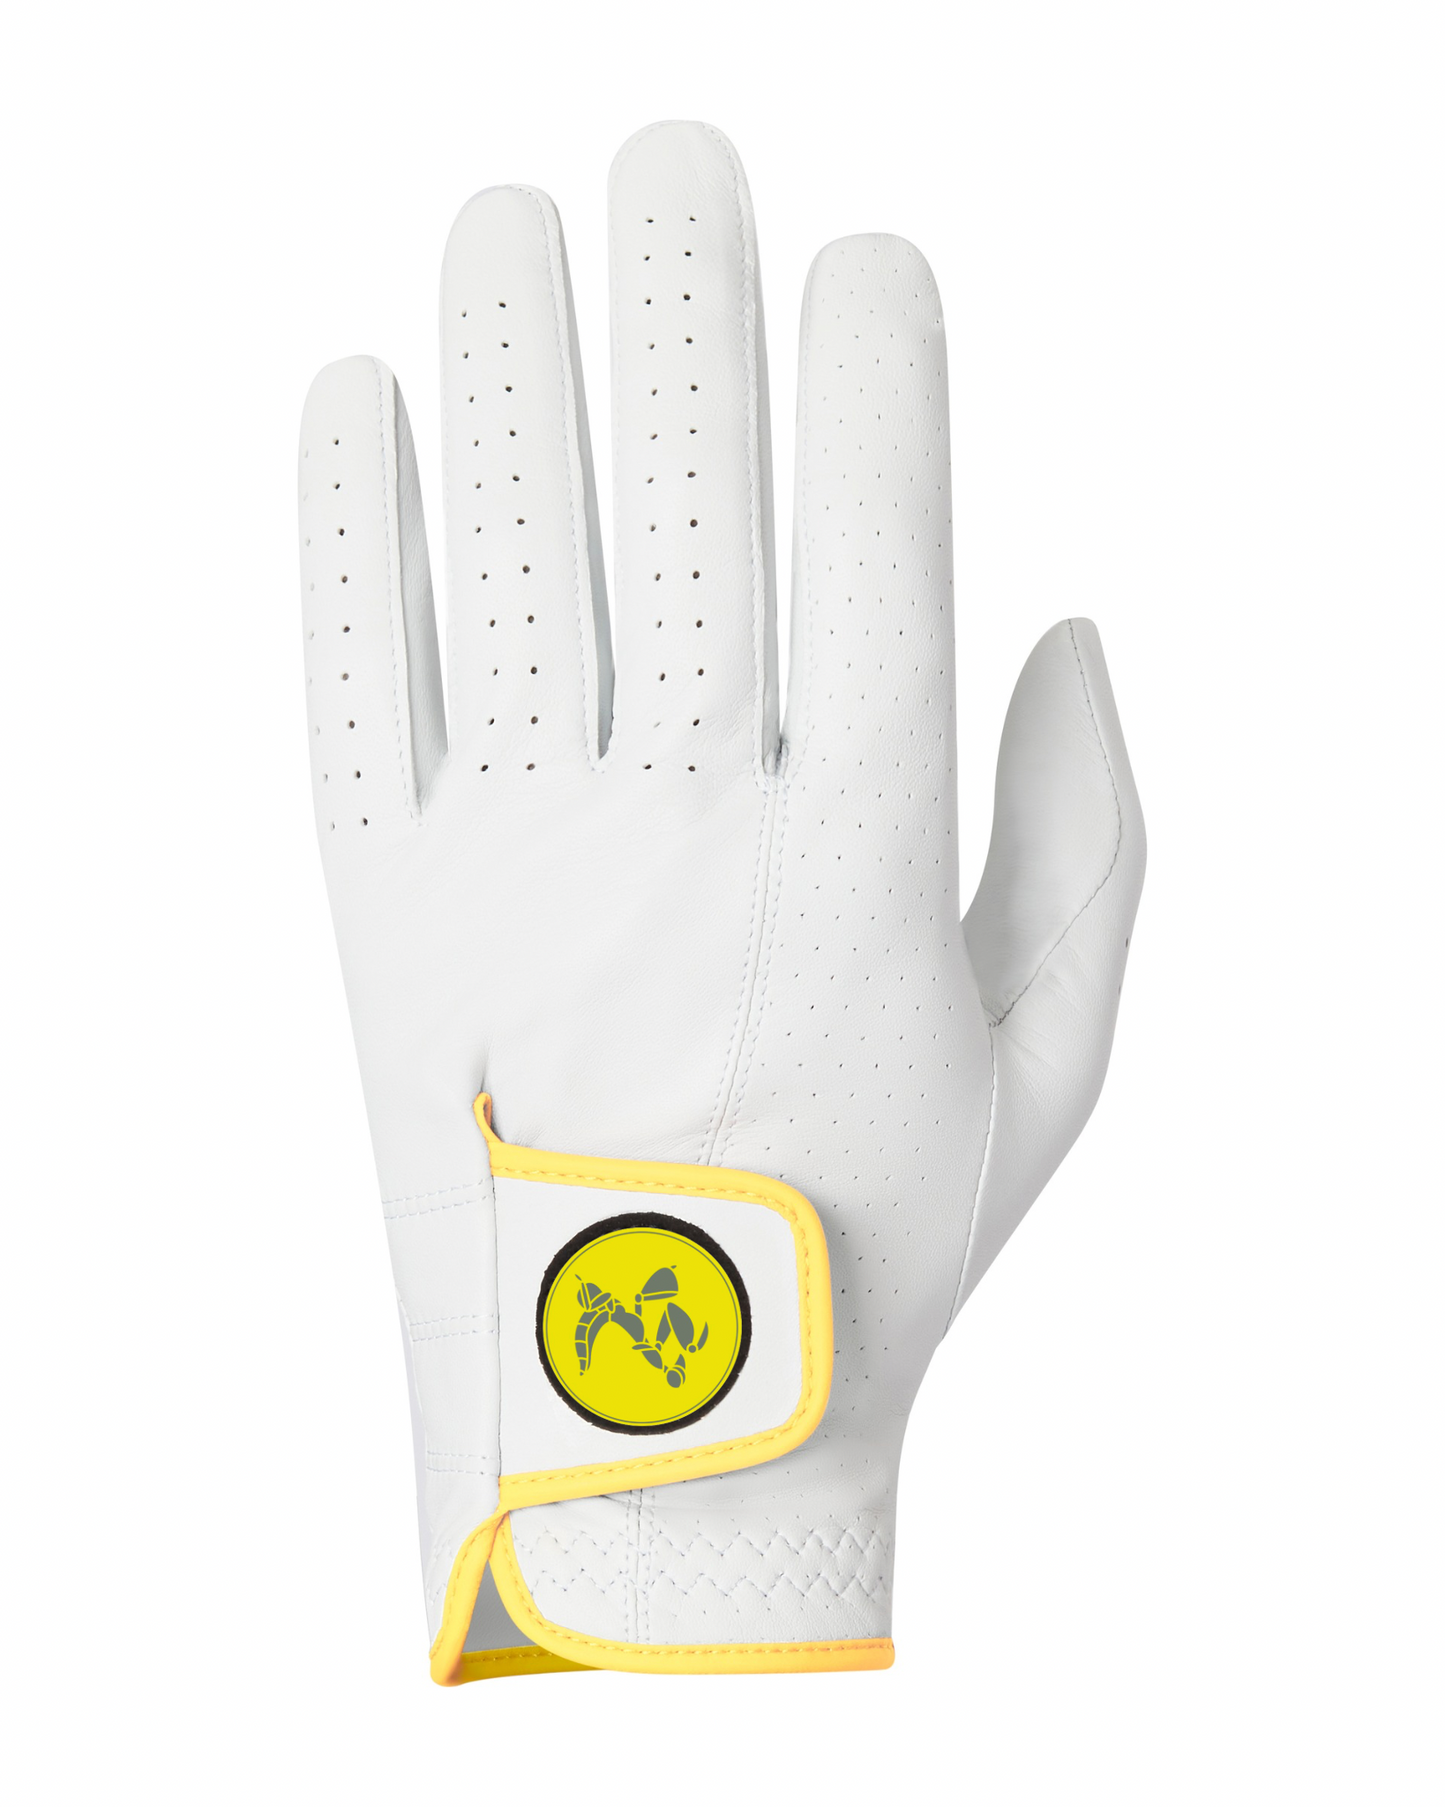 Ugogo Golf premium cabretta leather glove yellow logo & trim